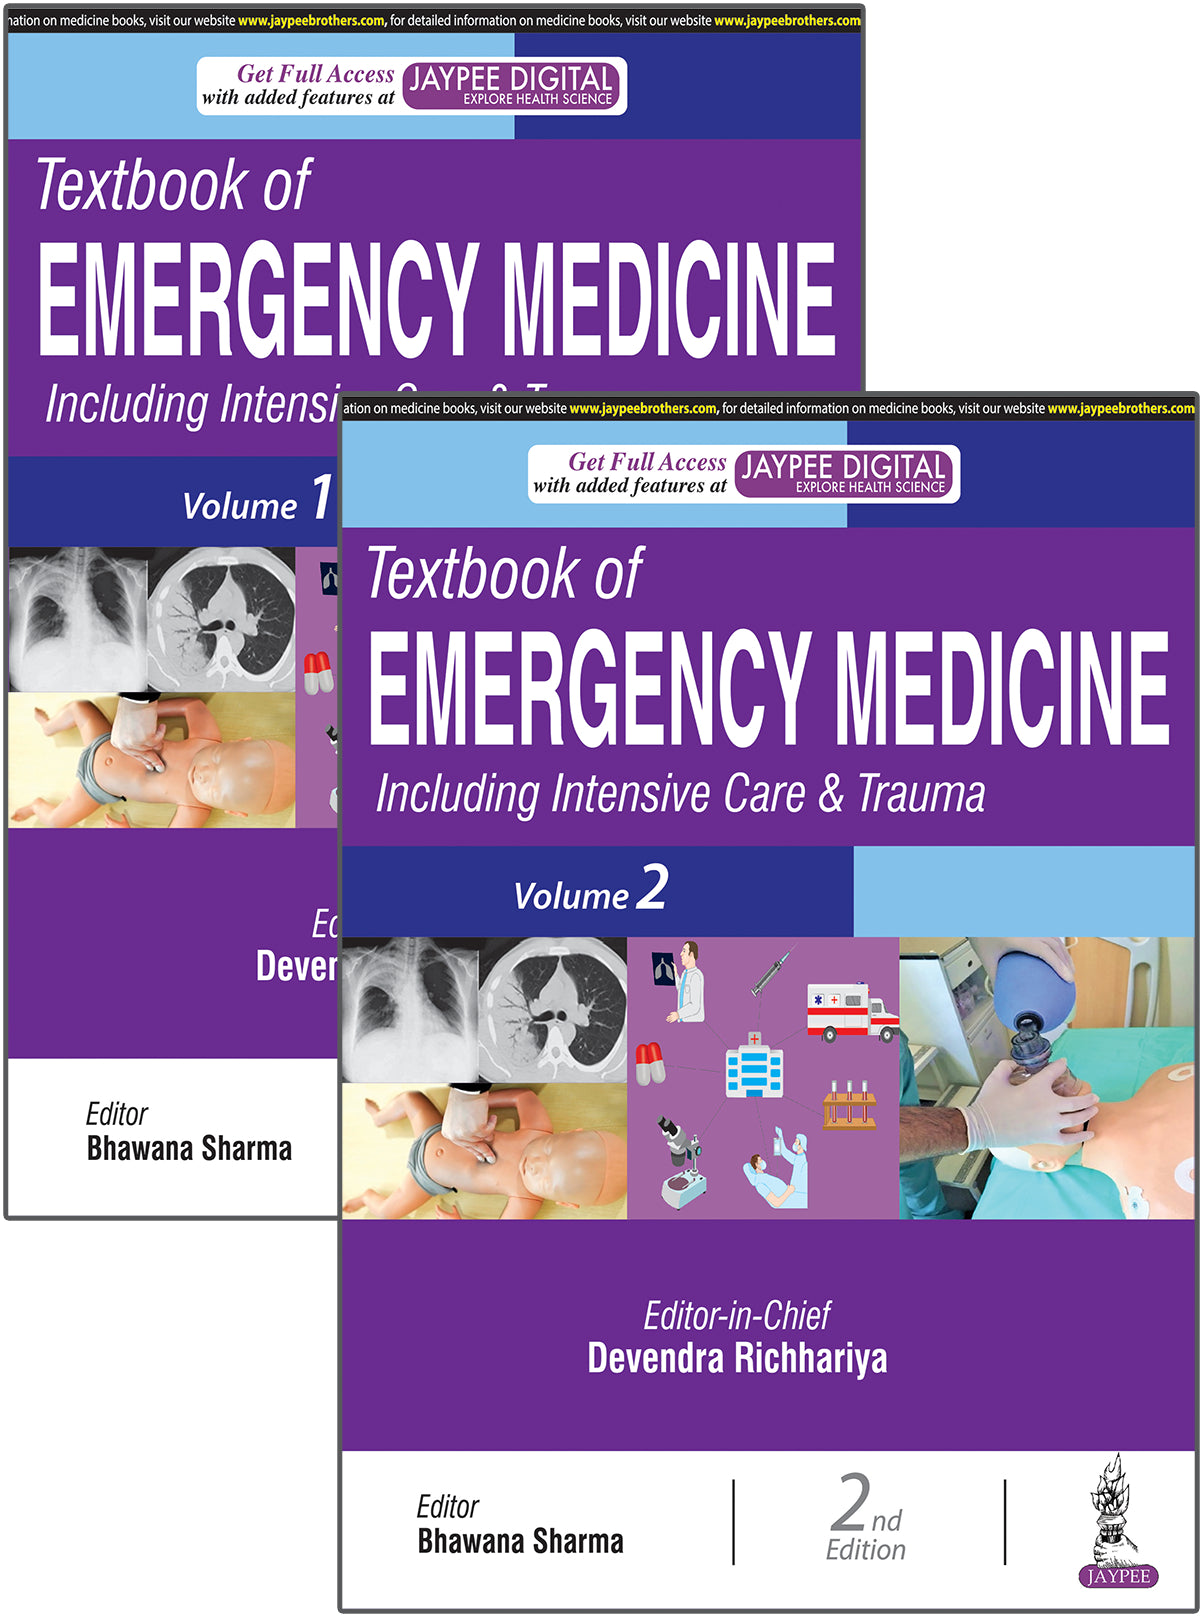 TEXTBOOK OF EMERGENCY MEDICINE: INCLUDING INTENSIVE CARE & TRAUMA (2 VOLUMES),2/E,DEVENDRA RICHHARIYA